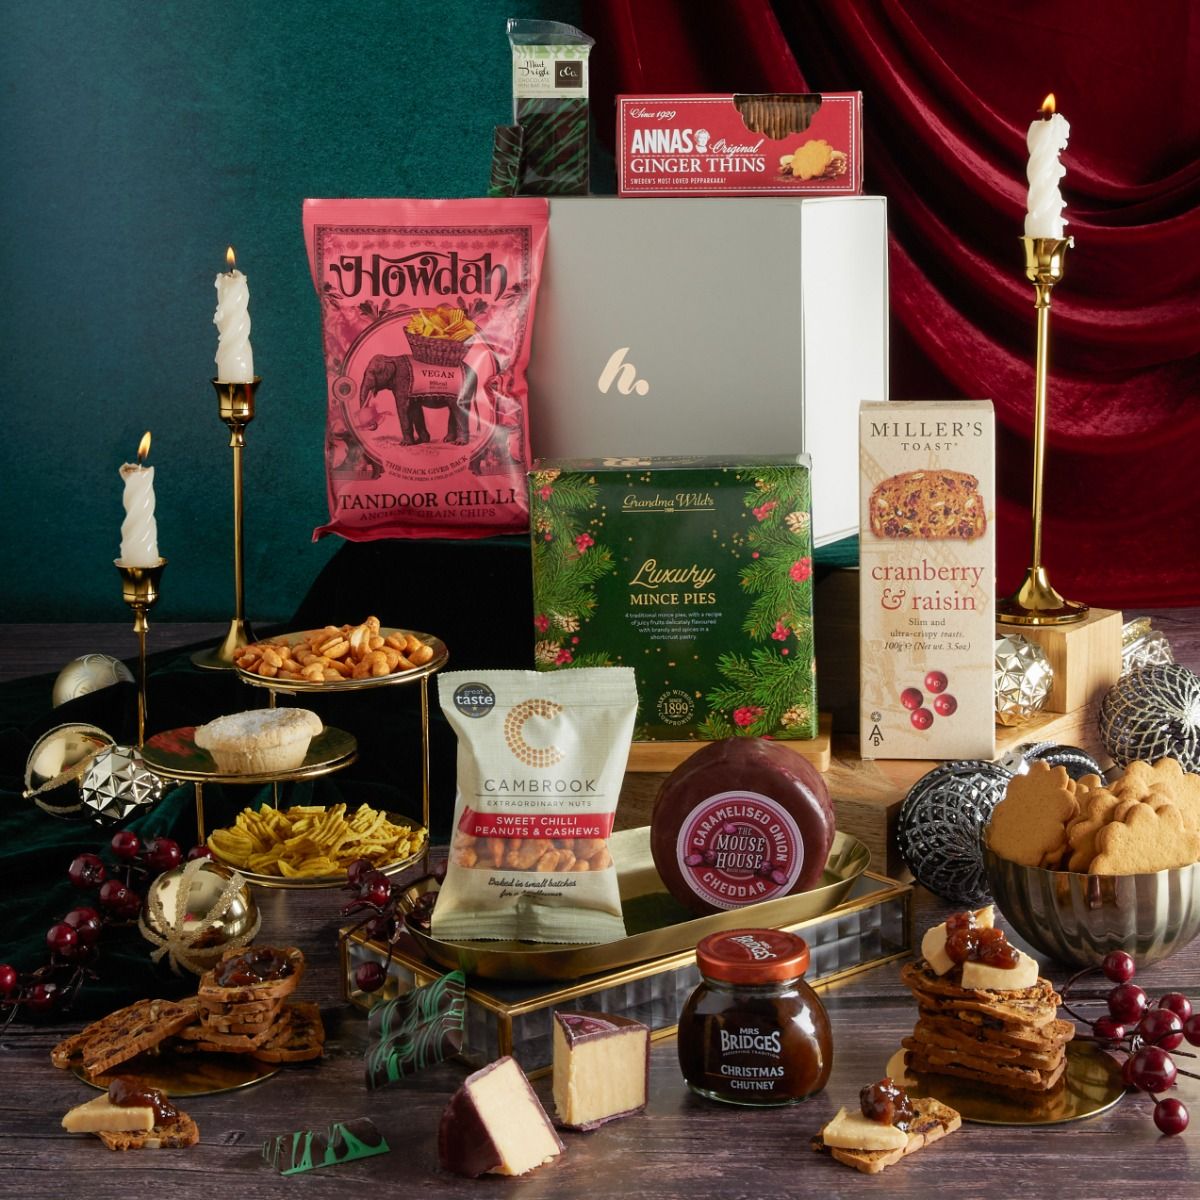 The Christmas Season Selection Gift Box with contents on display